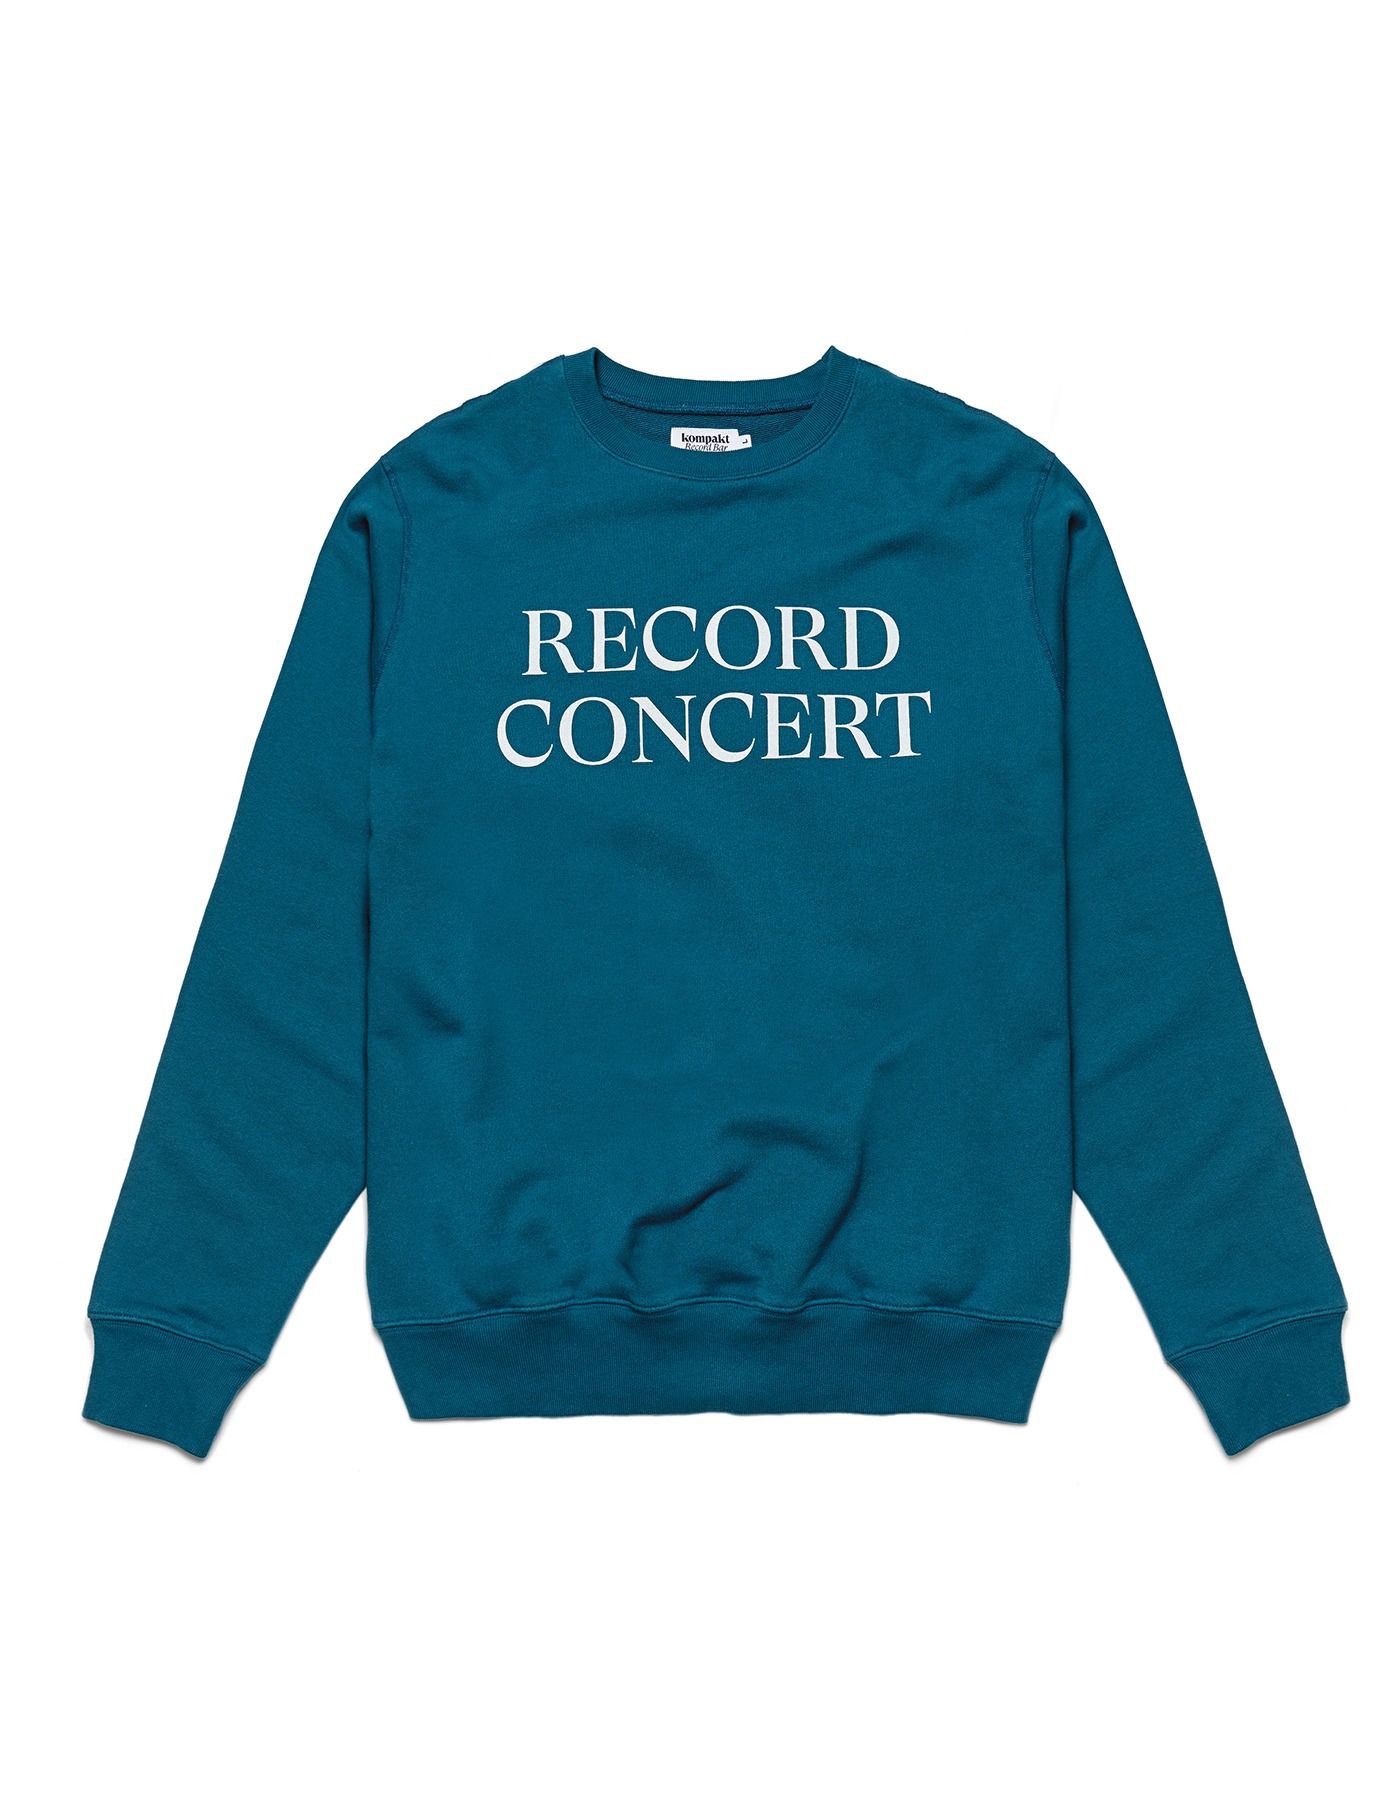 RECORD CONCERT Sweatshirts - Turquoise